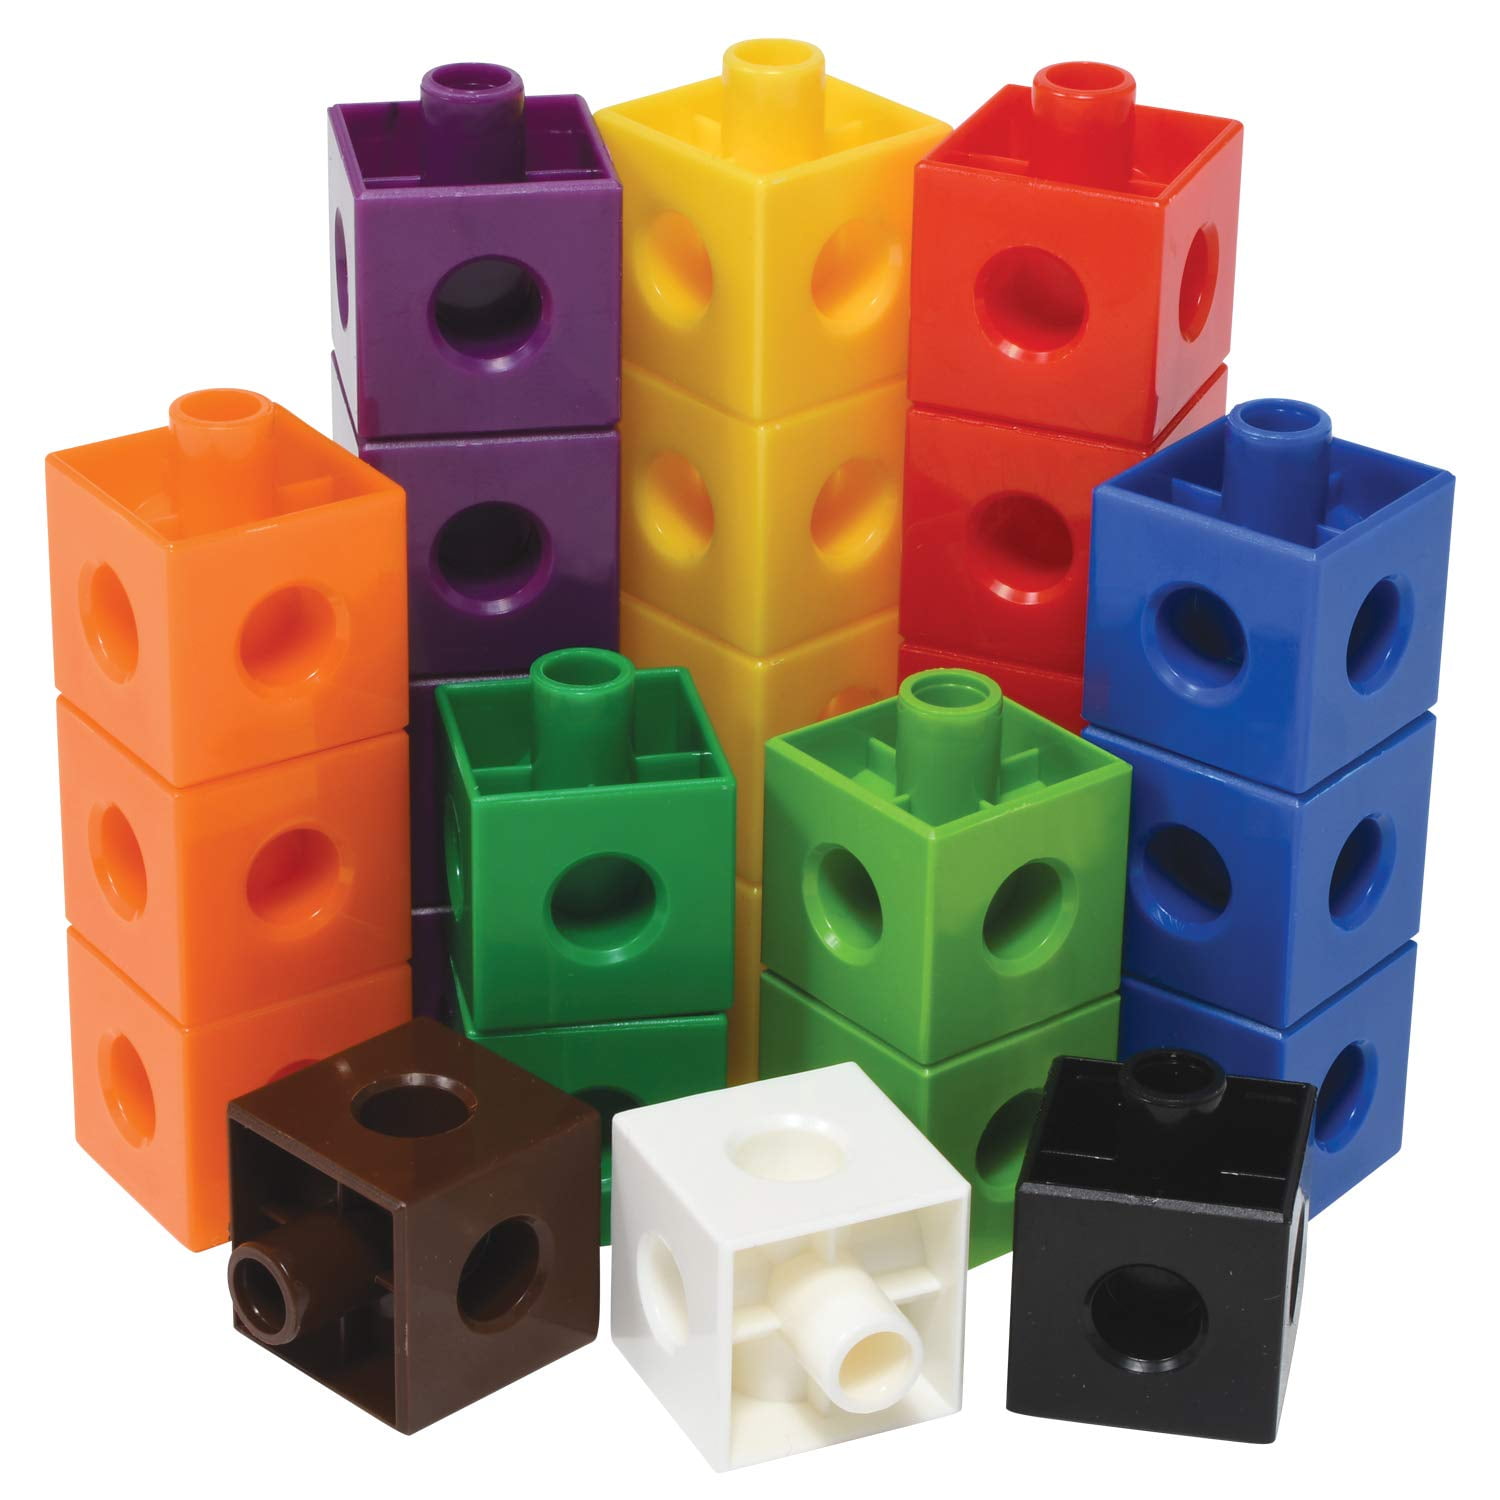 Linking Counting Cubes Snap Blocks Teaching Math Homeschool 200 pcs 4 colors 